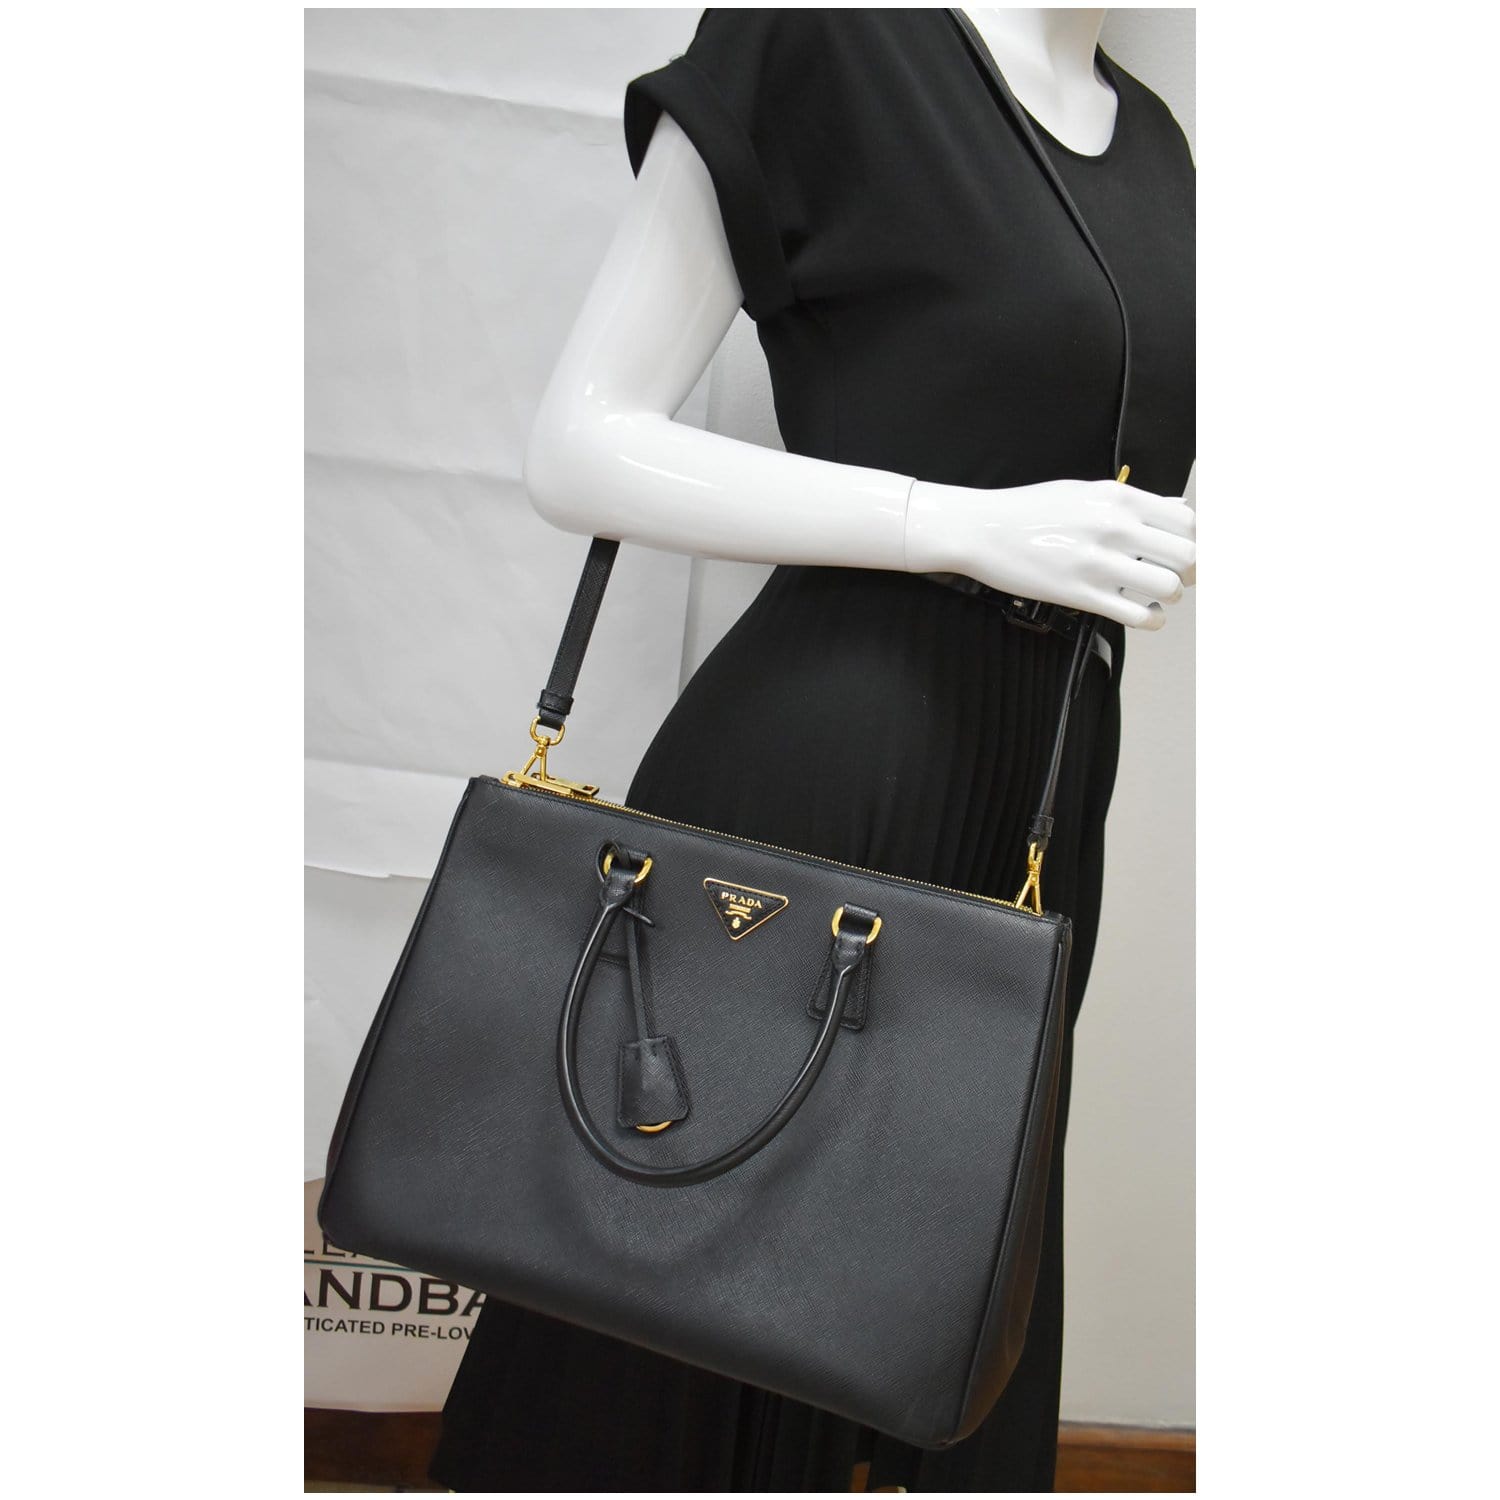 Prada Galleria Saffiano leather large bag